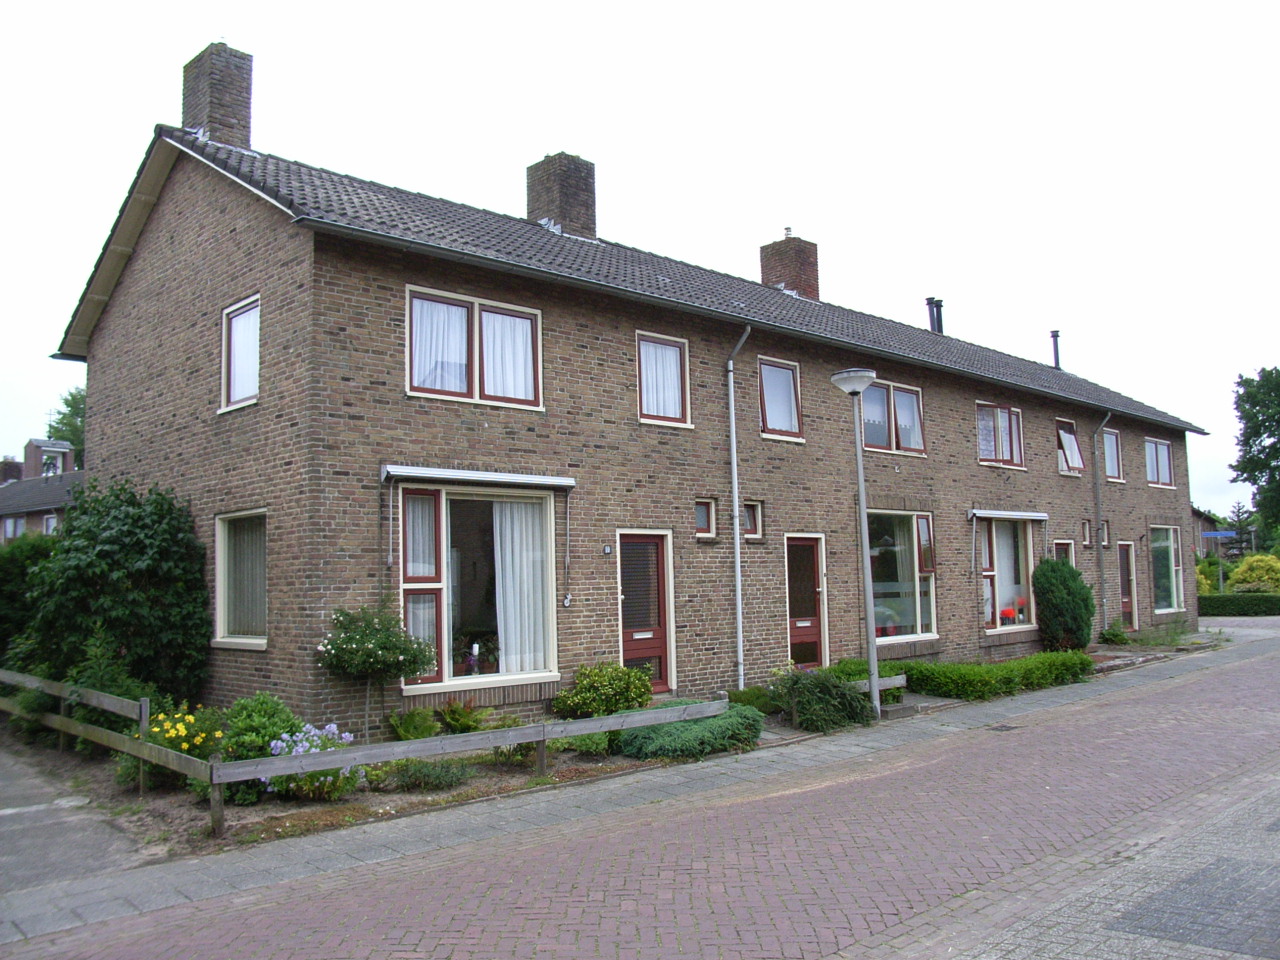 W. van Graftweg 12, 9765 GM Paterswolde, Nederland